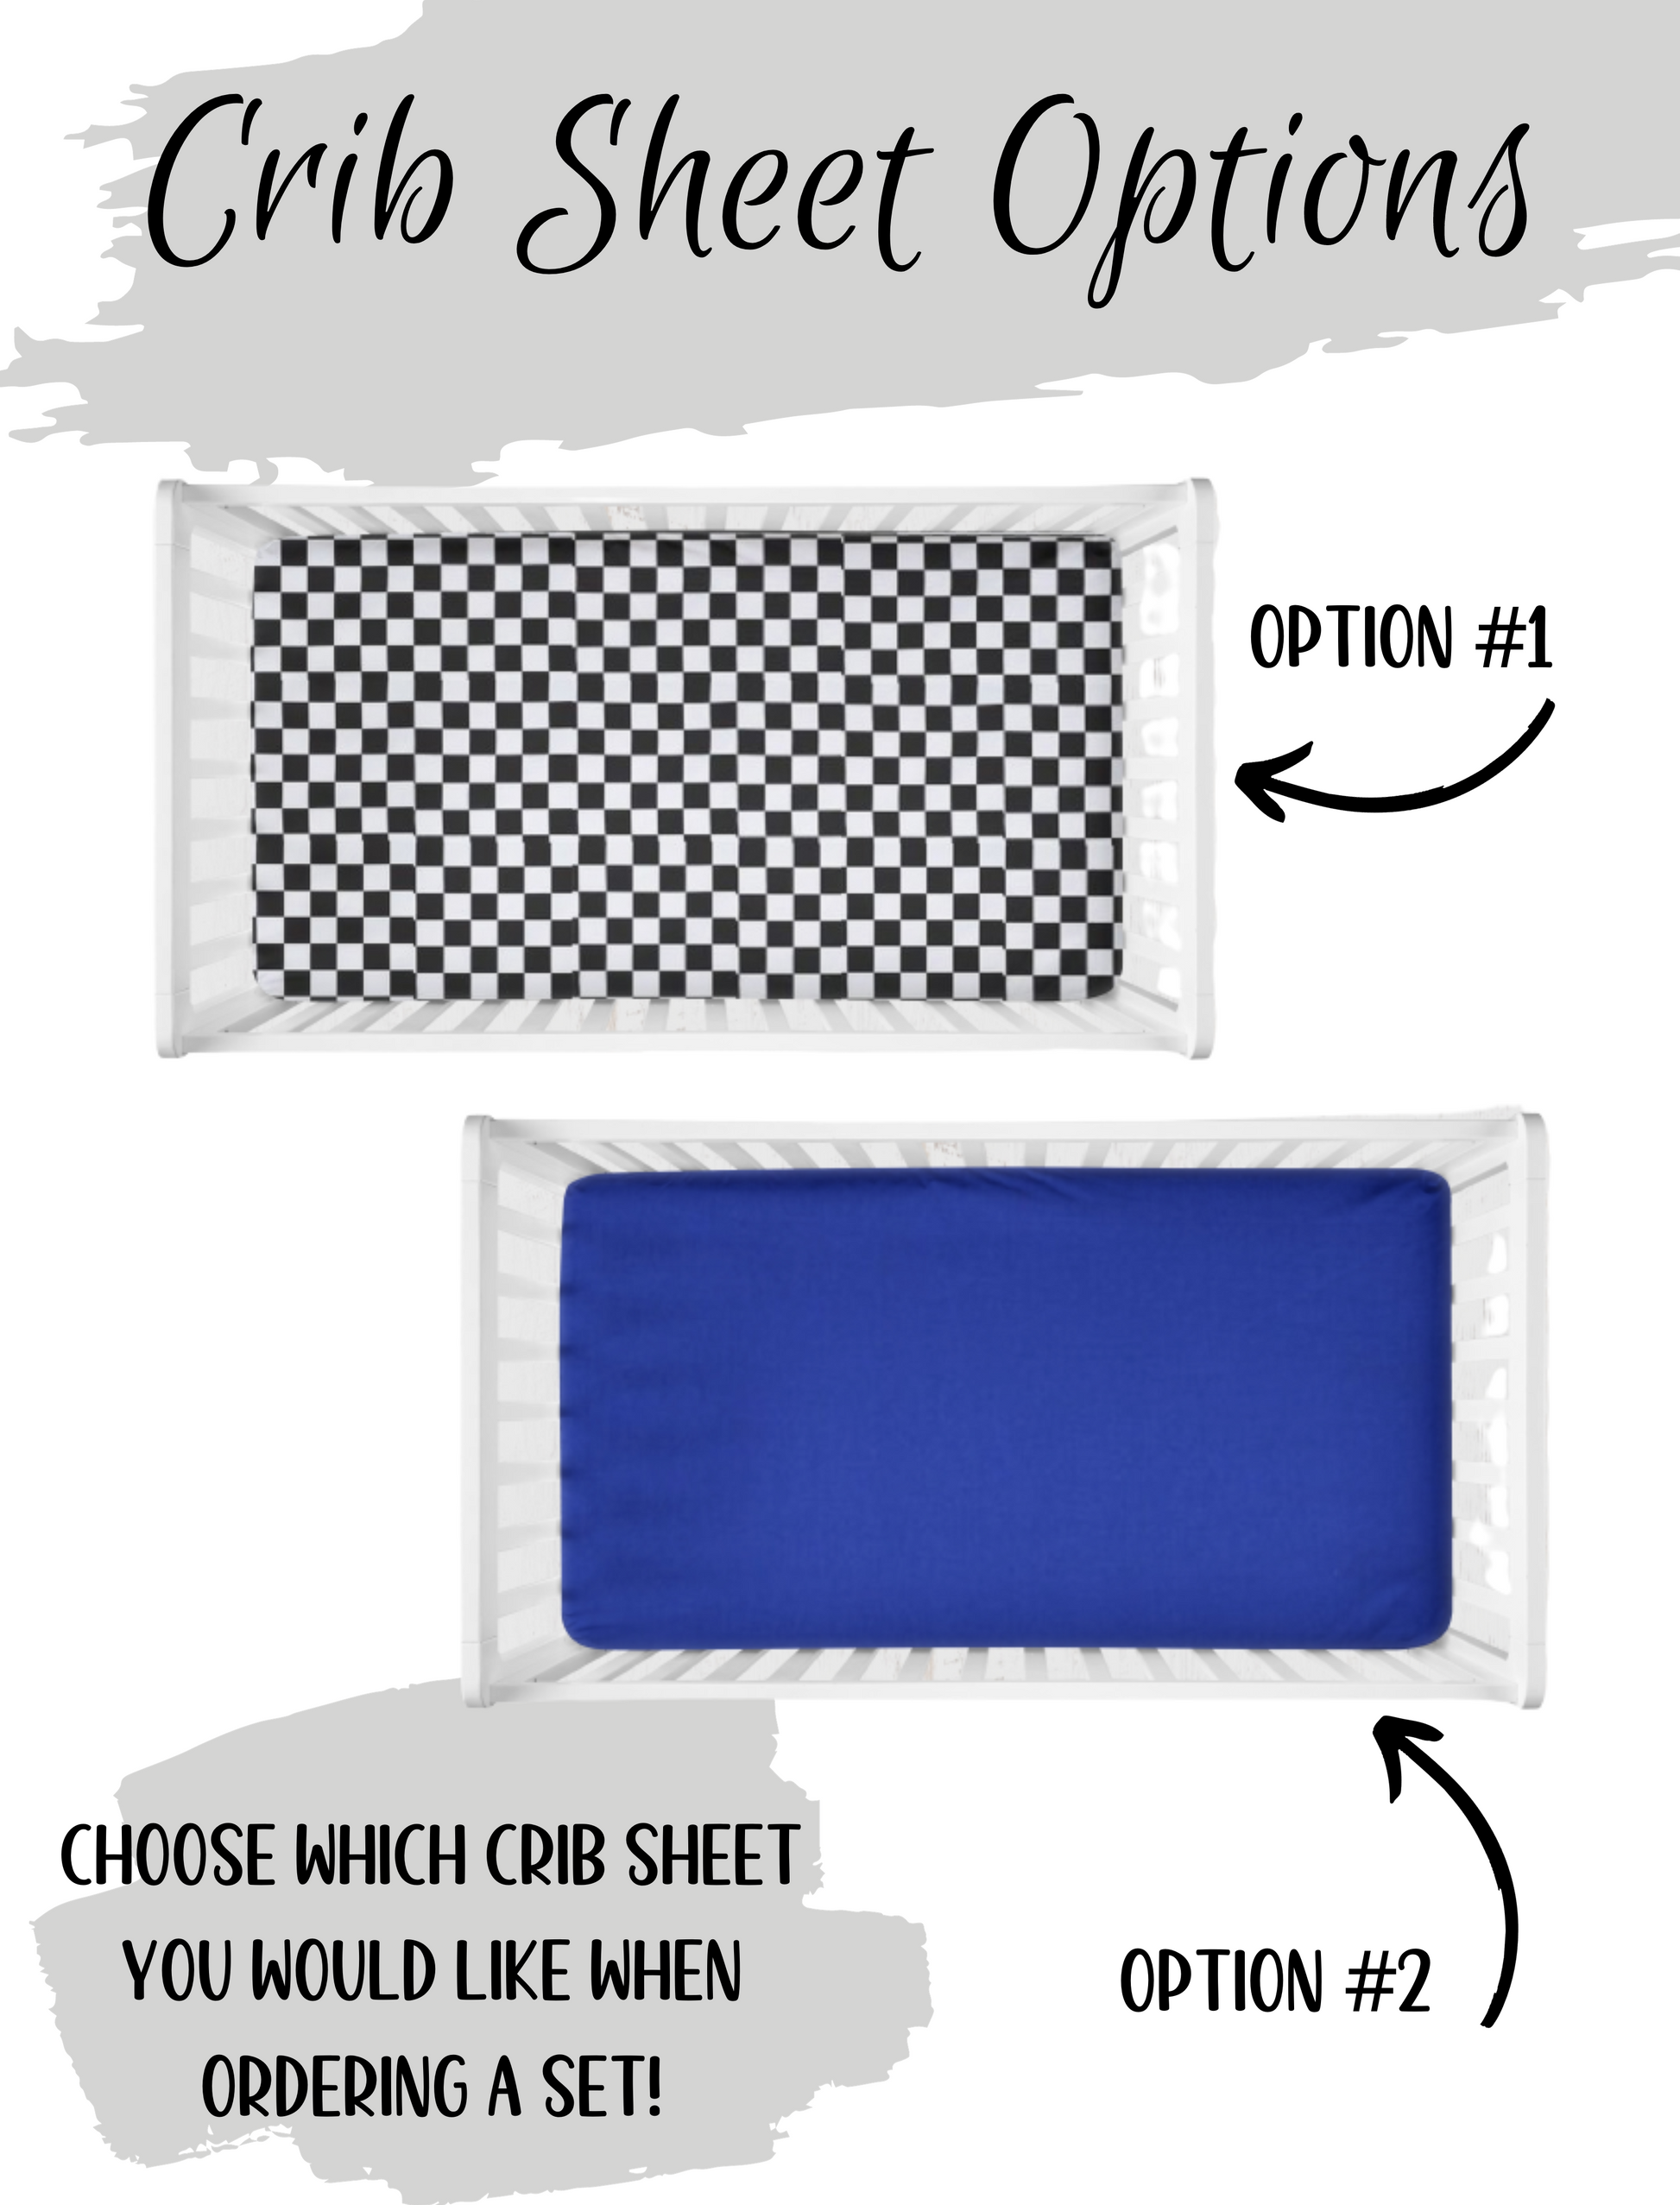 pick your crib sheet - racing check crib sheet or blue crib sheet